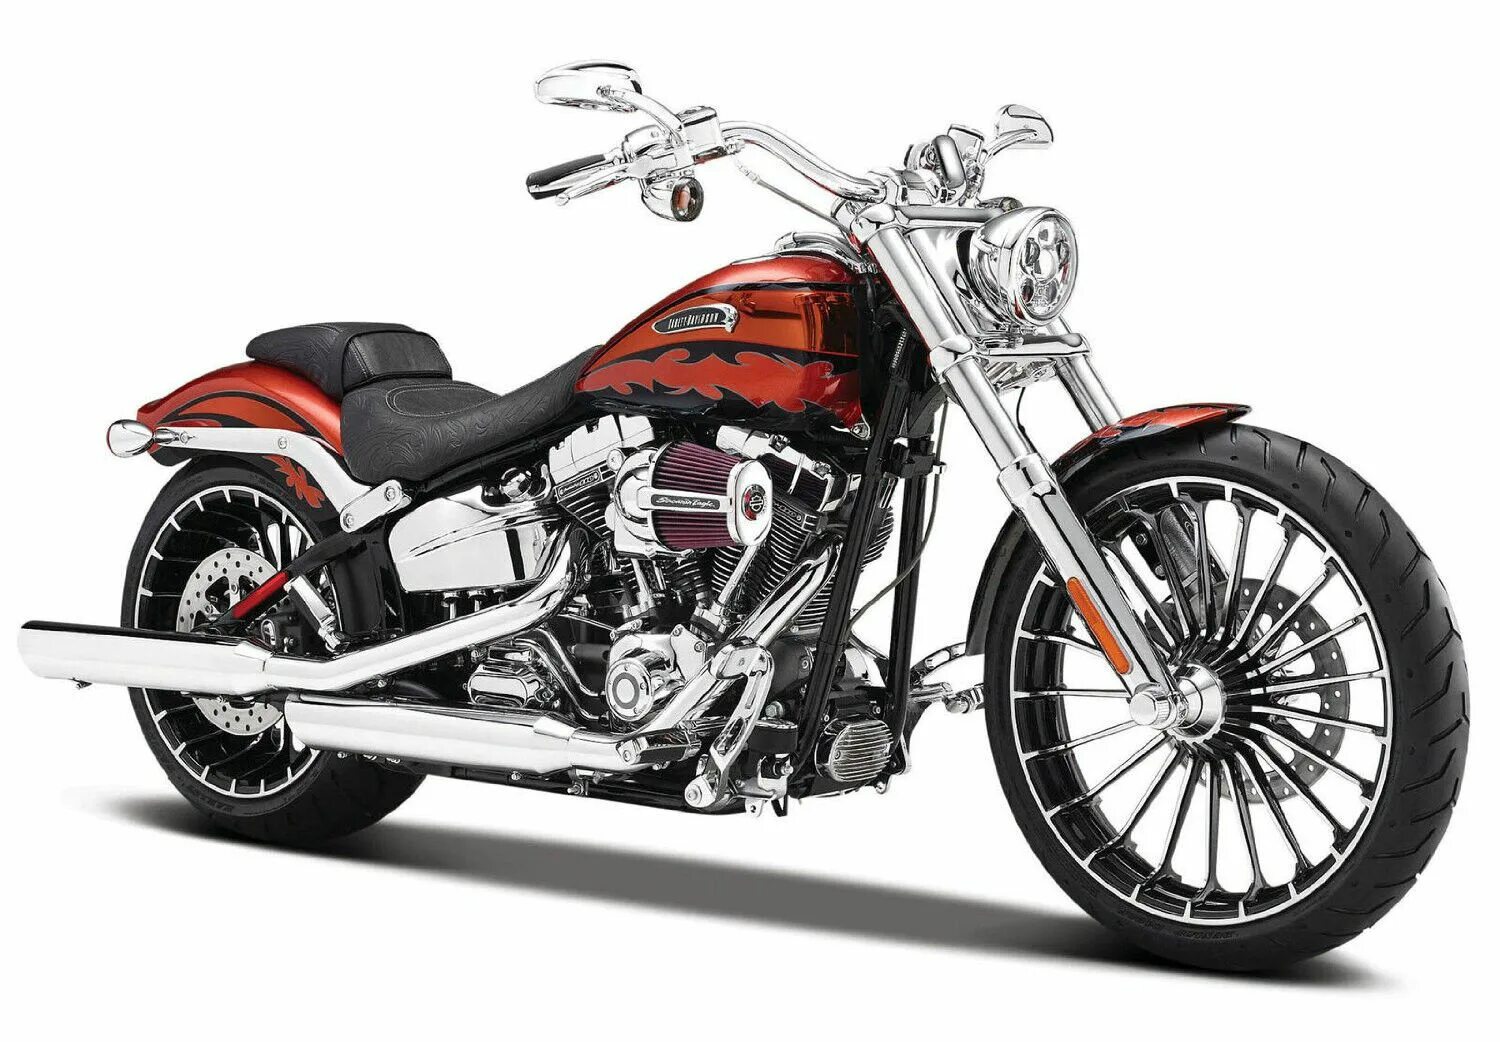 Мотоцикл Харли Девинсон. Мотоцикл Харлей Дэвидсон. Мотоцикл Харли Дэвид со н. Harley Davidson 2014 CVO Breakout. Байк цена новый